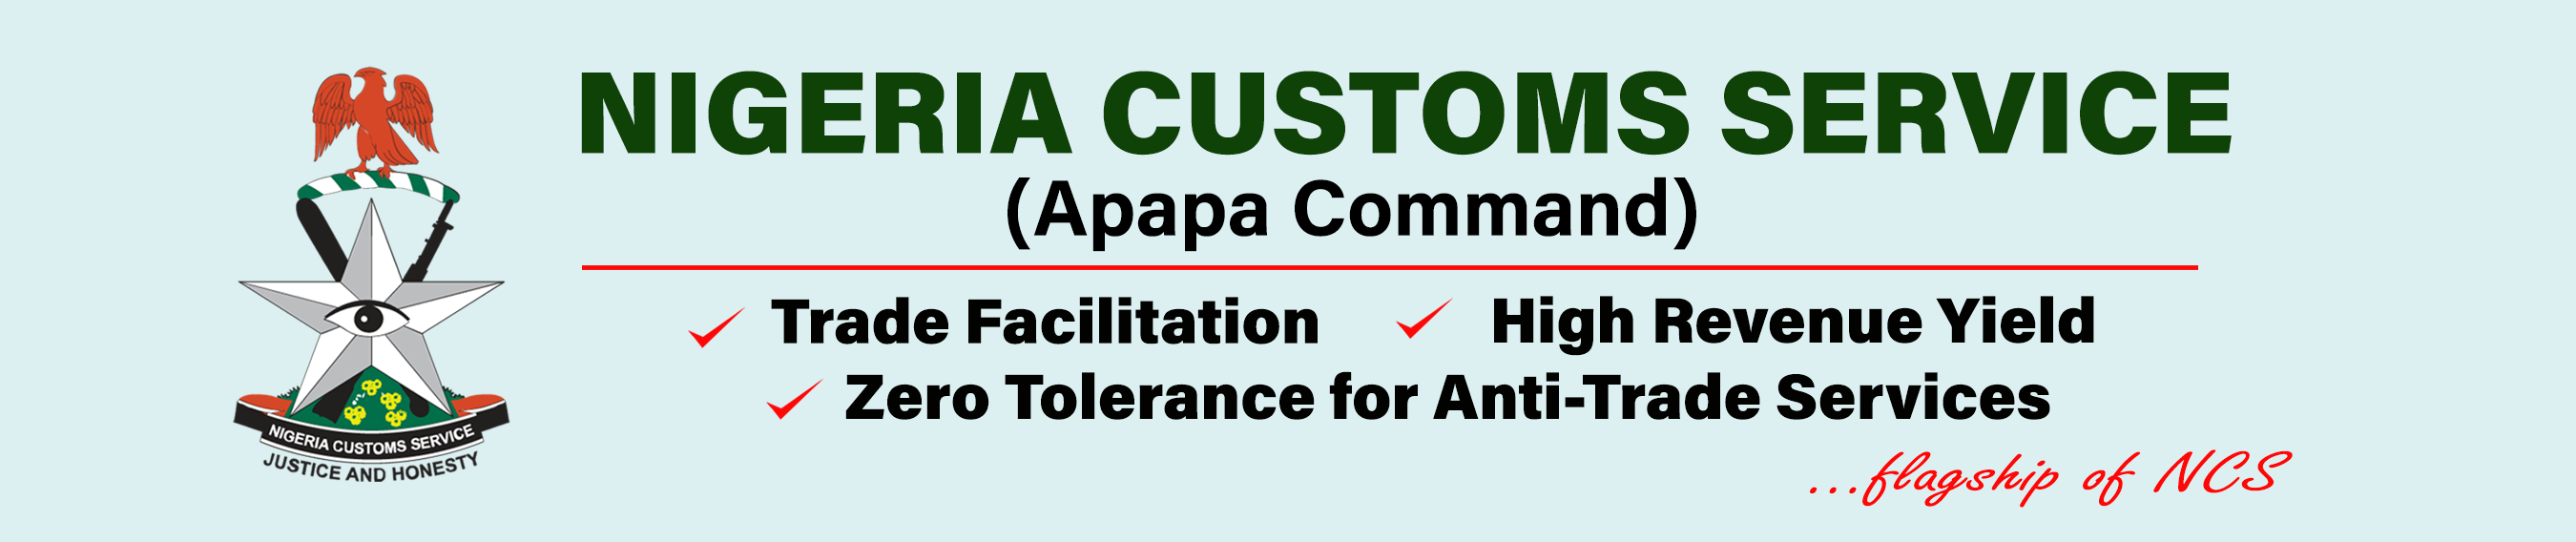 apapa-customs-advert-online-lb